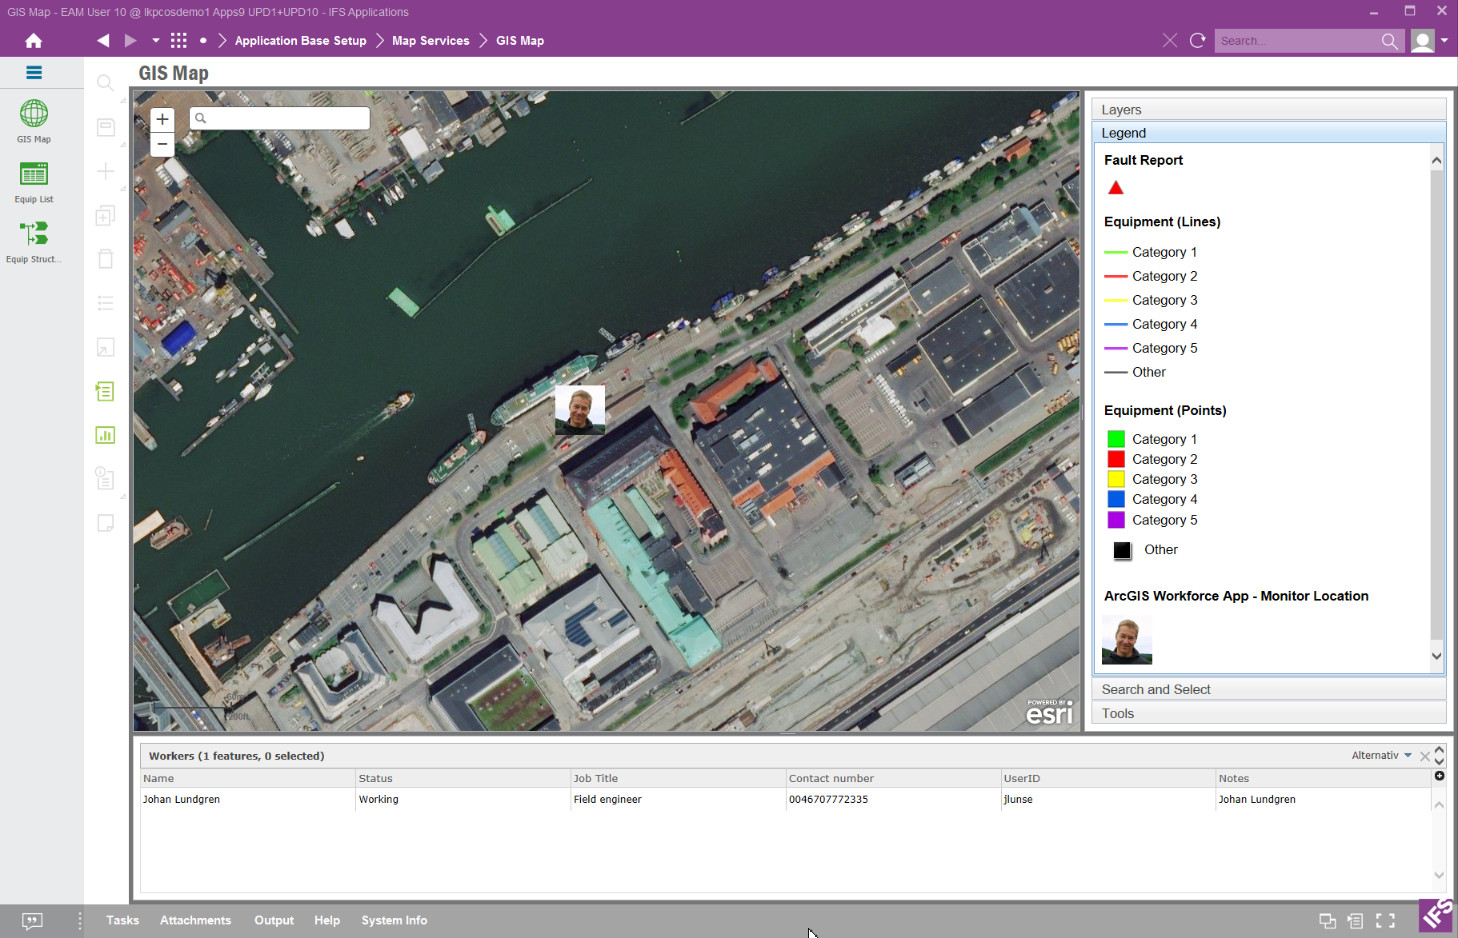 ArcGIS Workforce App - Monitor Location